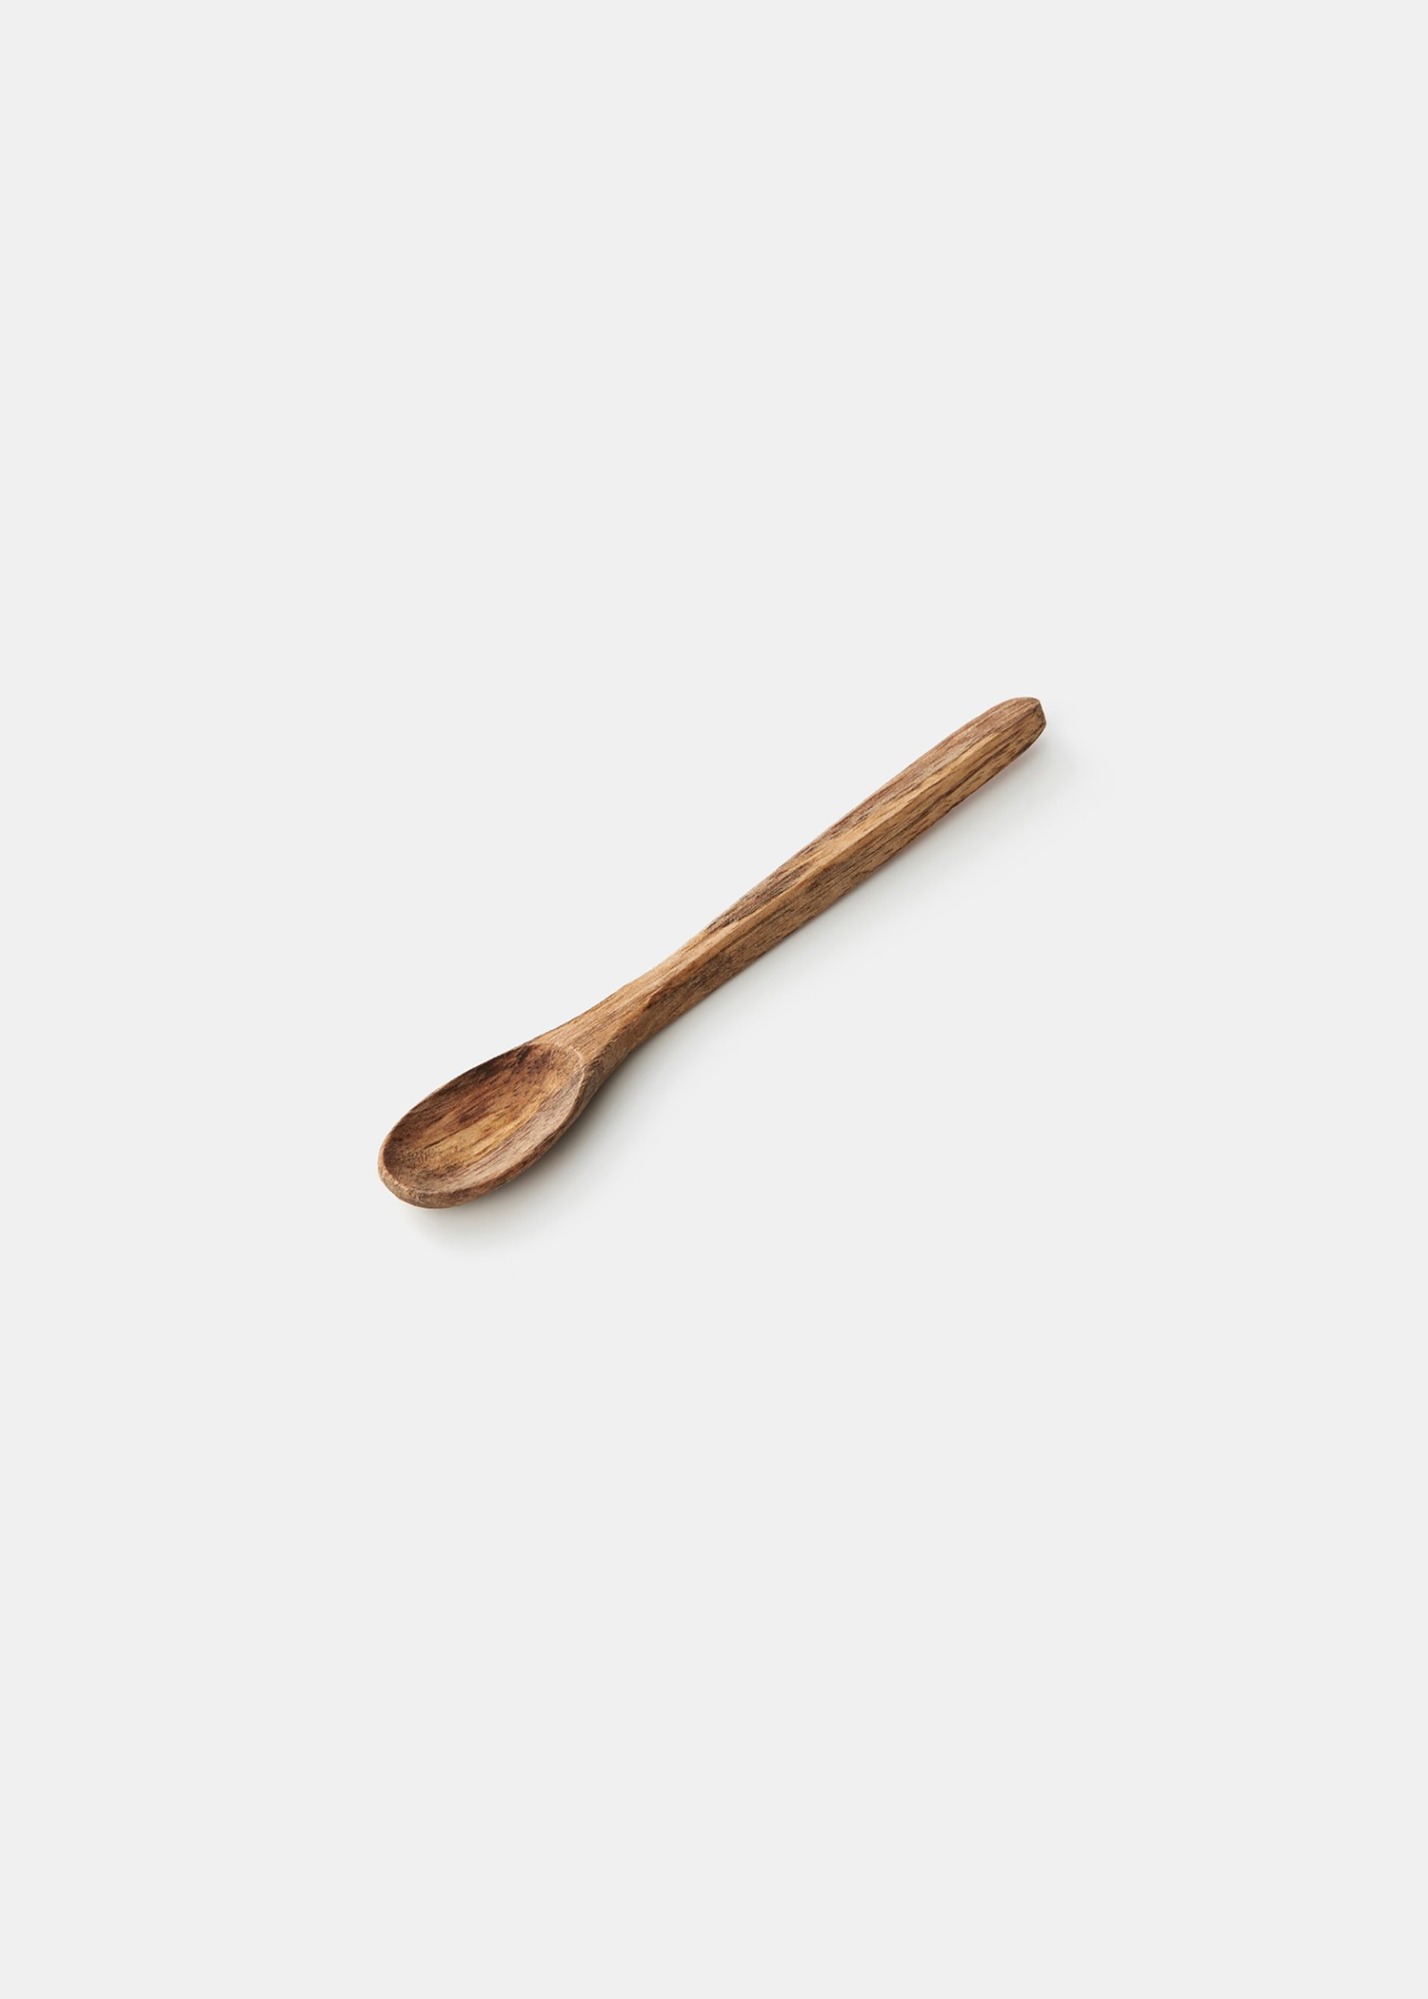 Mango Wood Tea Spoon